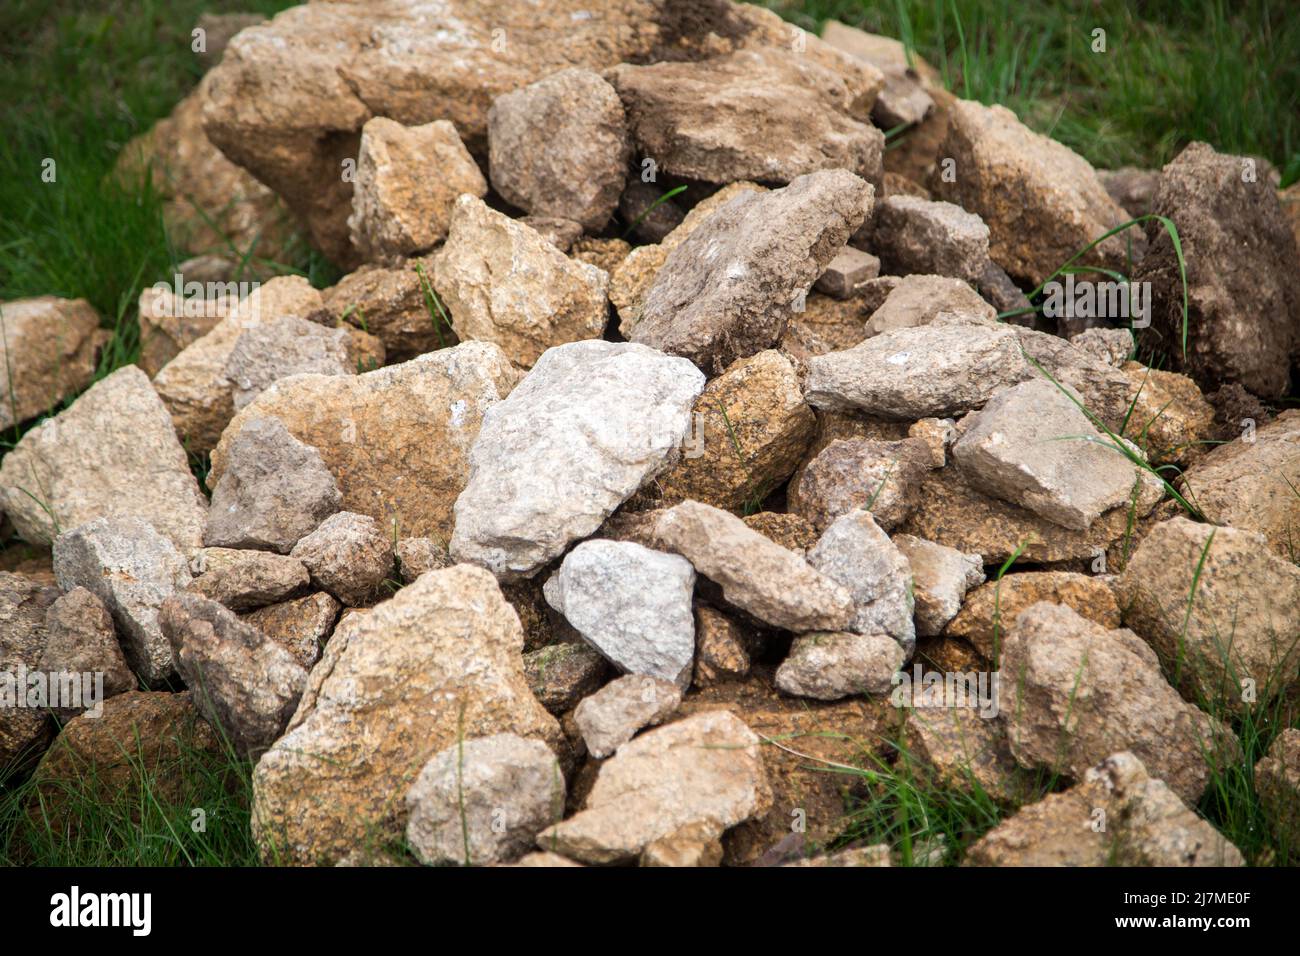 Pile of granite stones Stock Photo